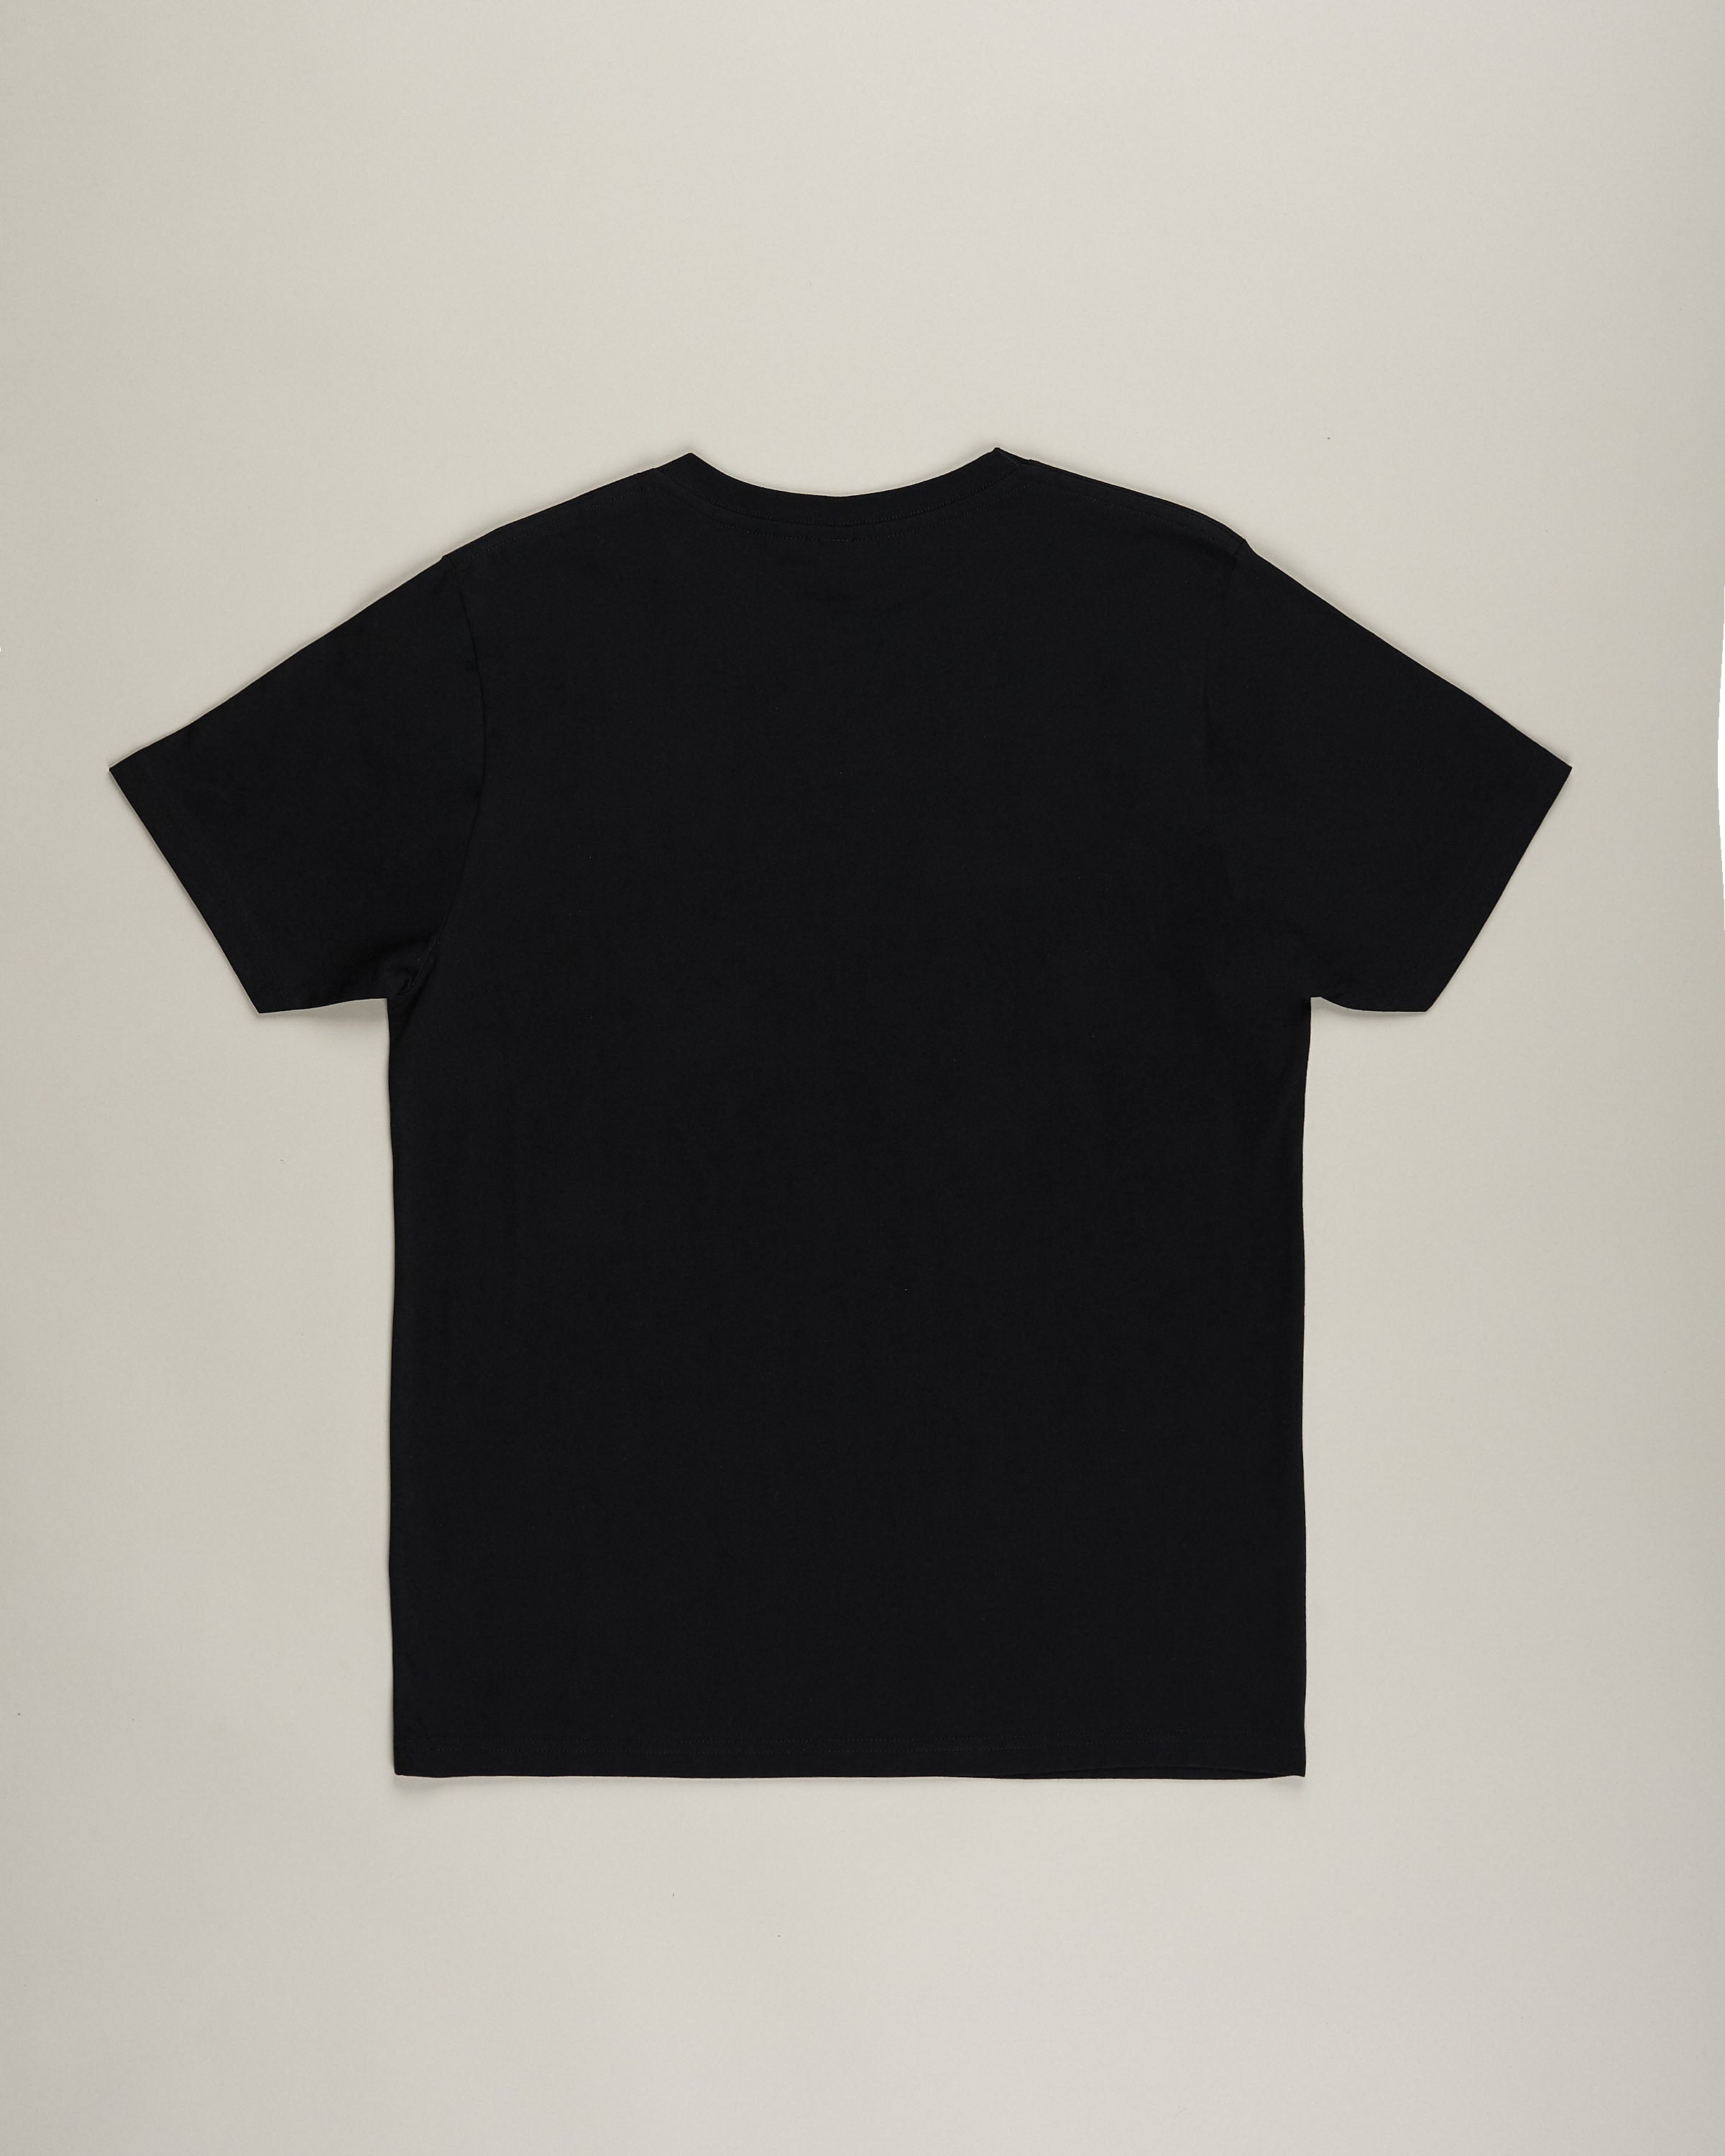 Time Warp Fan Shirt, black